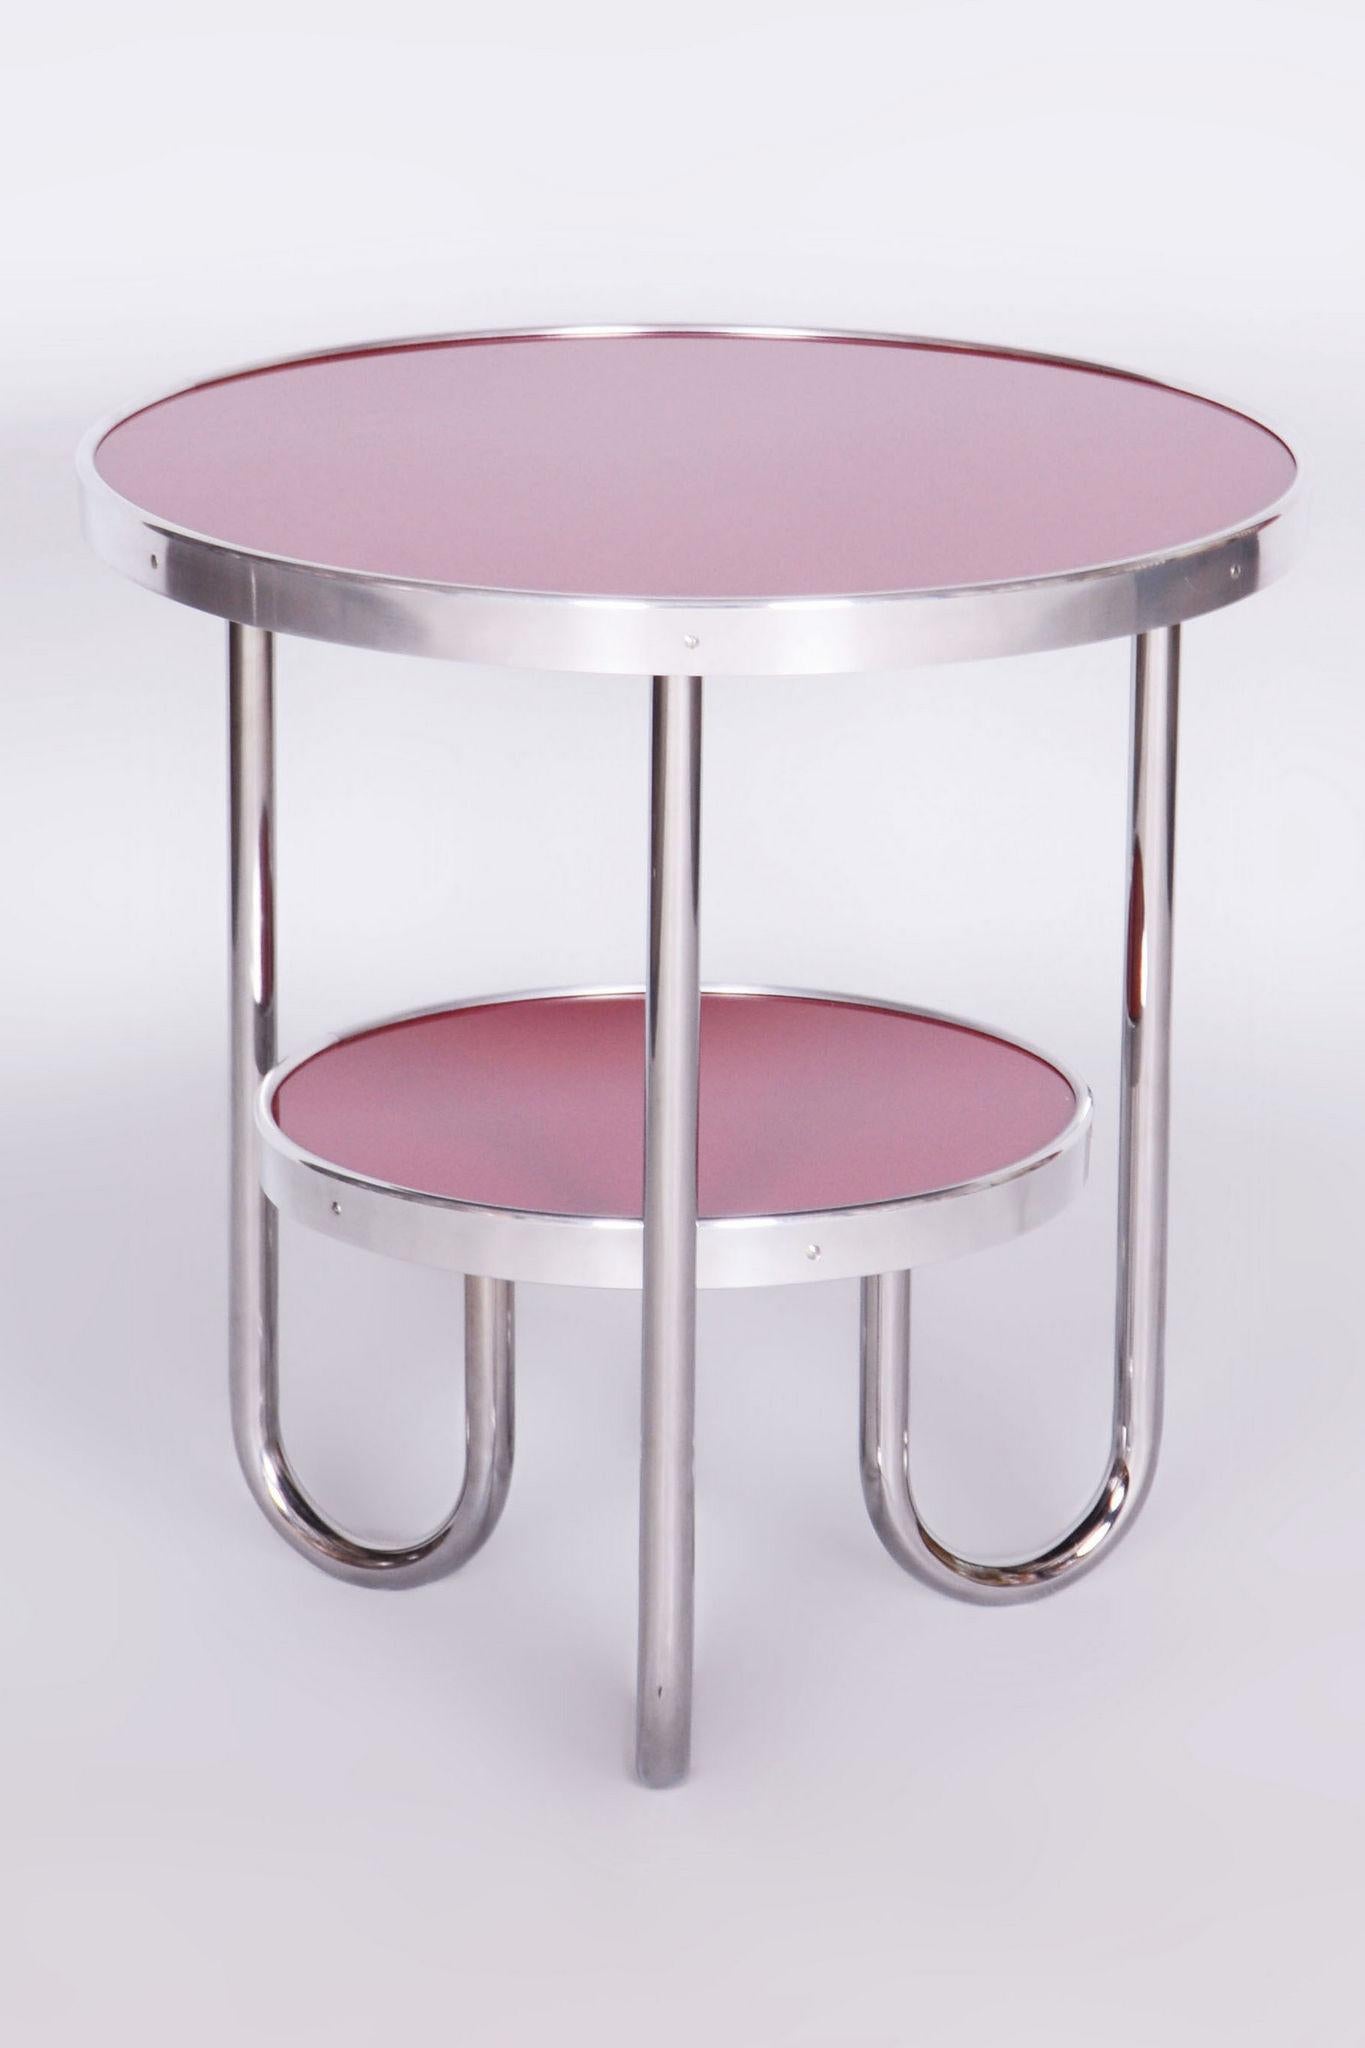 Restored Bauhaus Small Table, Kovona, Spruce, Chrome, Czechia, 1930s For Sale 5